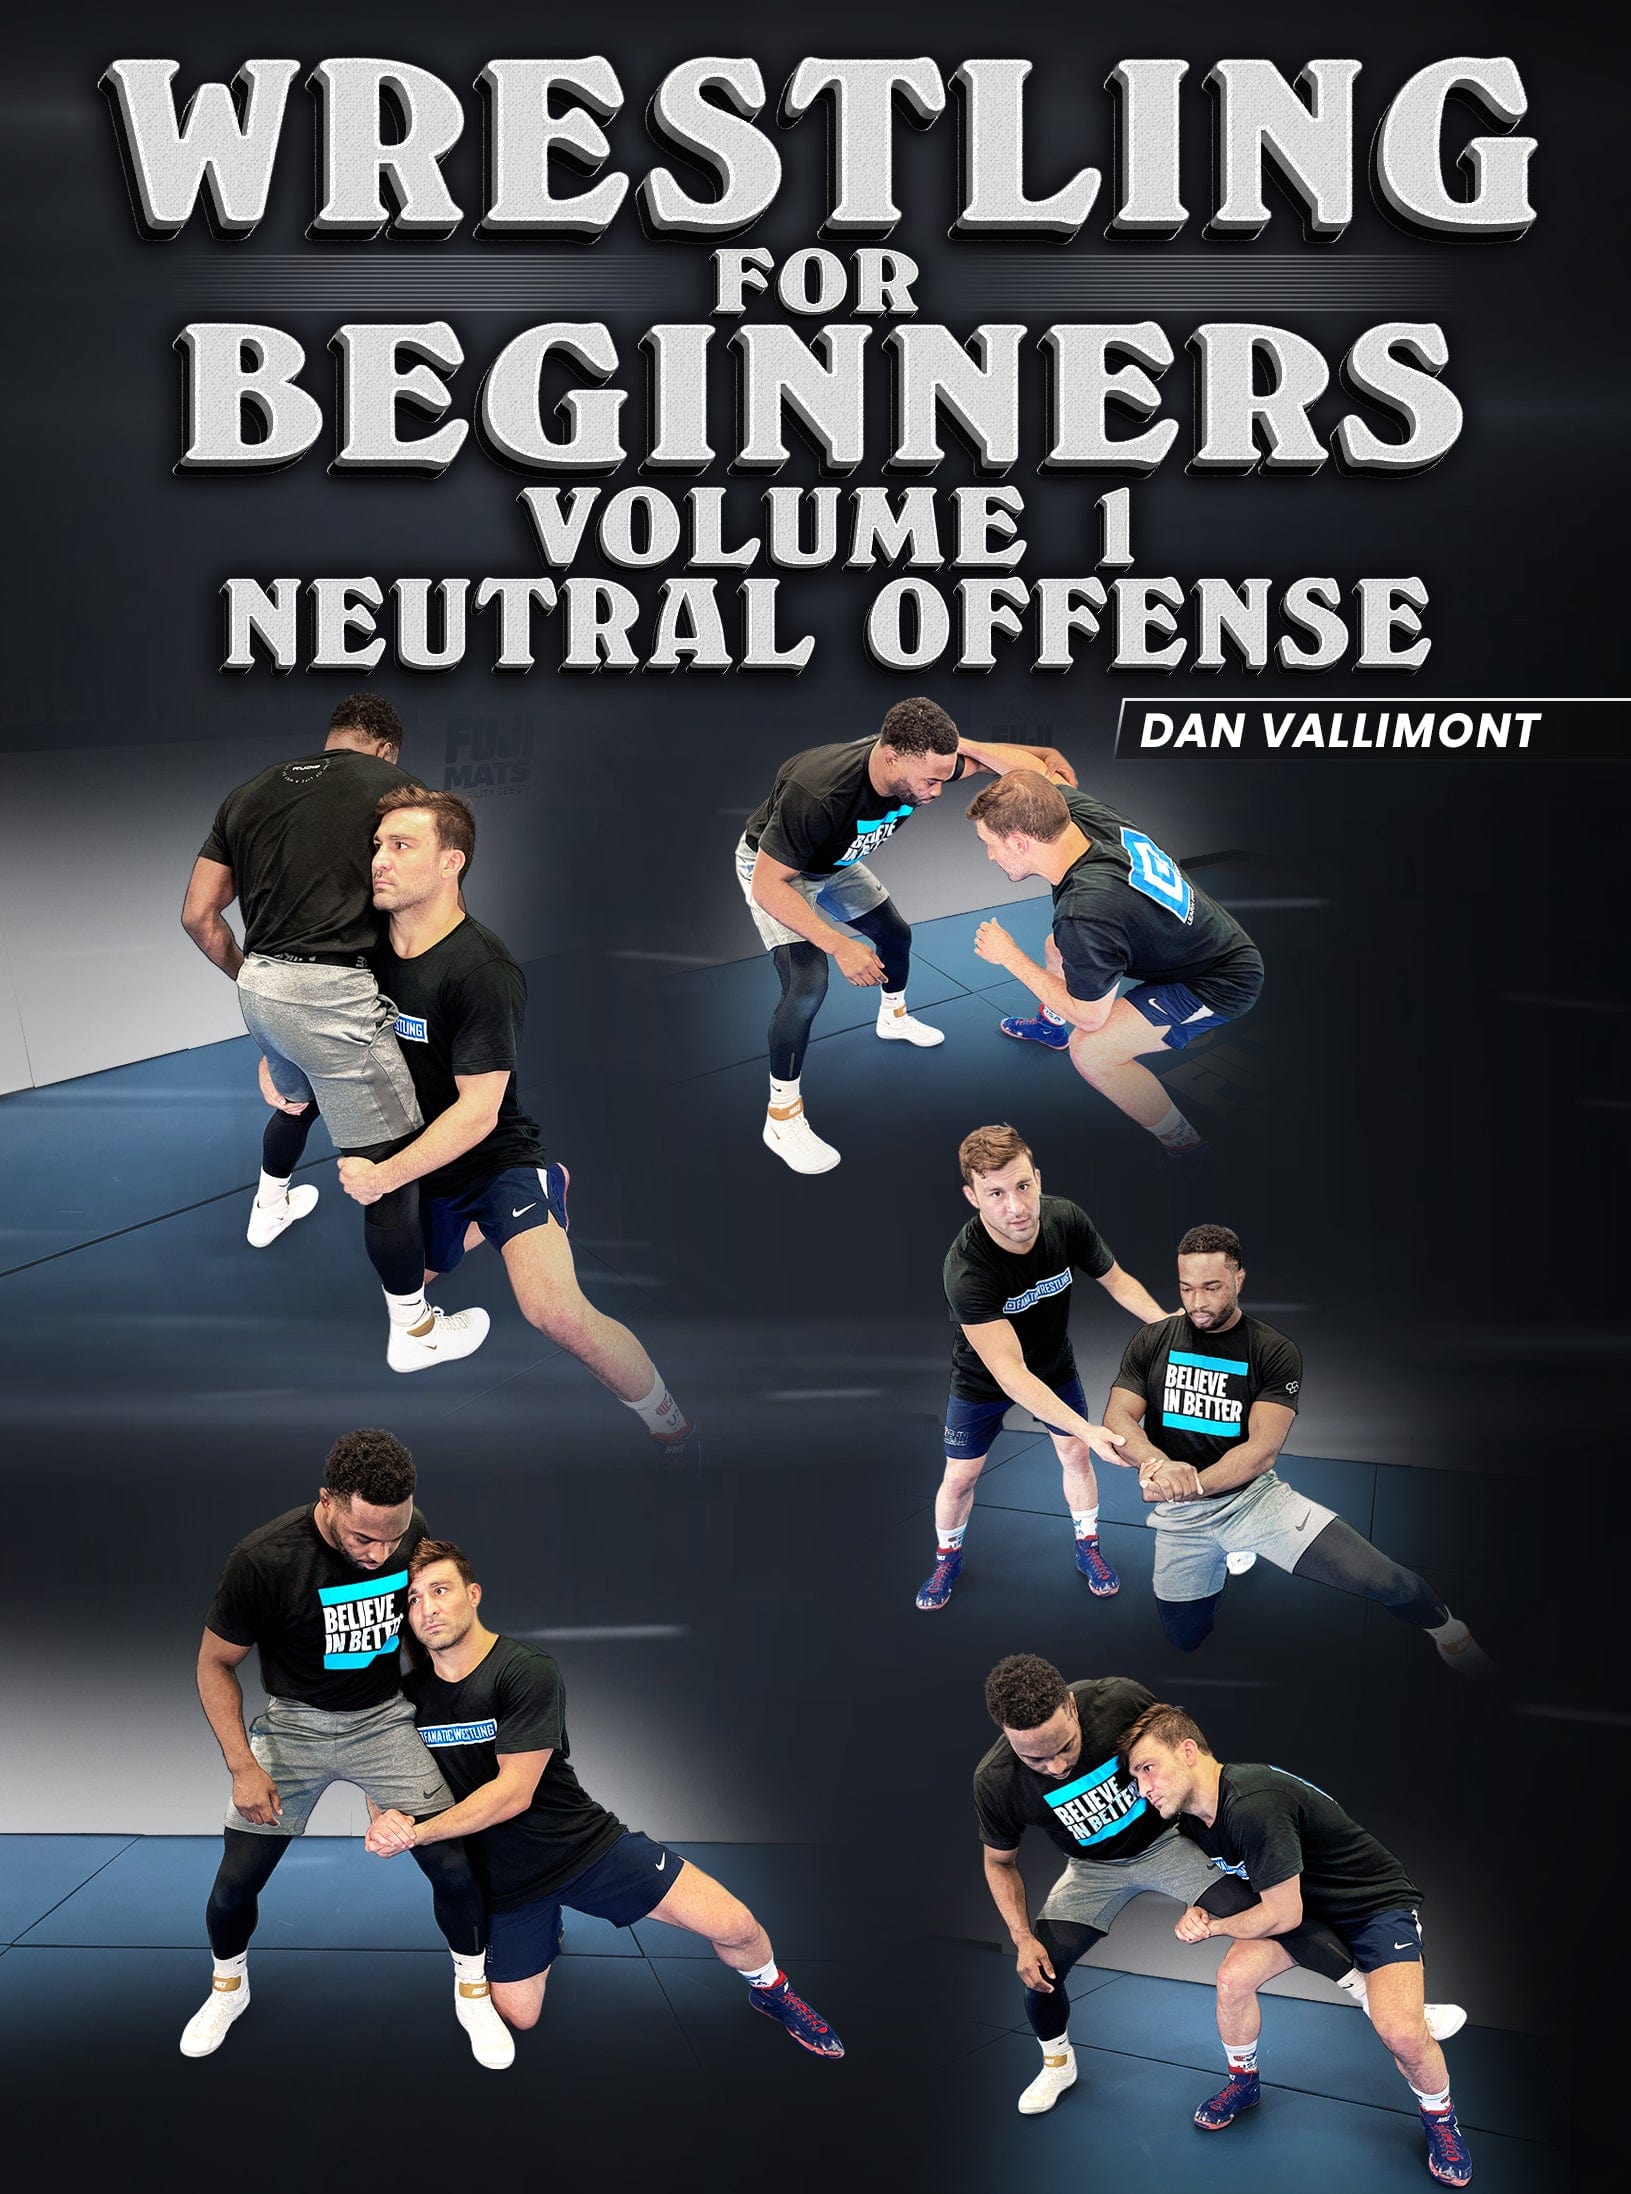 Wrestling For Beginners Volume 1: Neutral Offense by Dan Vallimont - Fanatic Wrestling